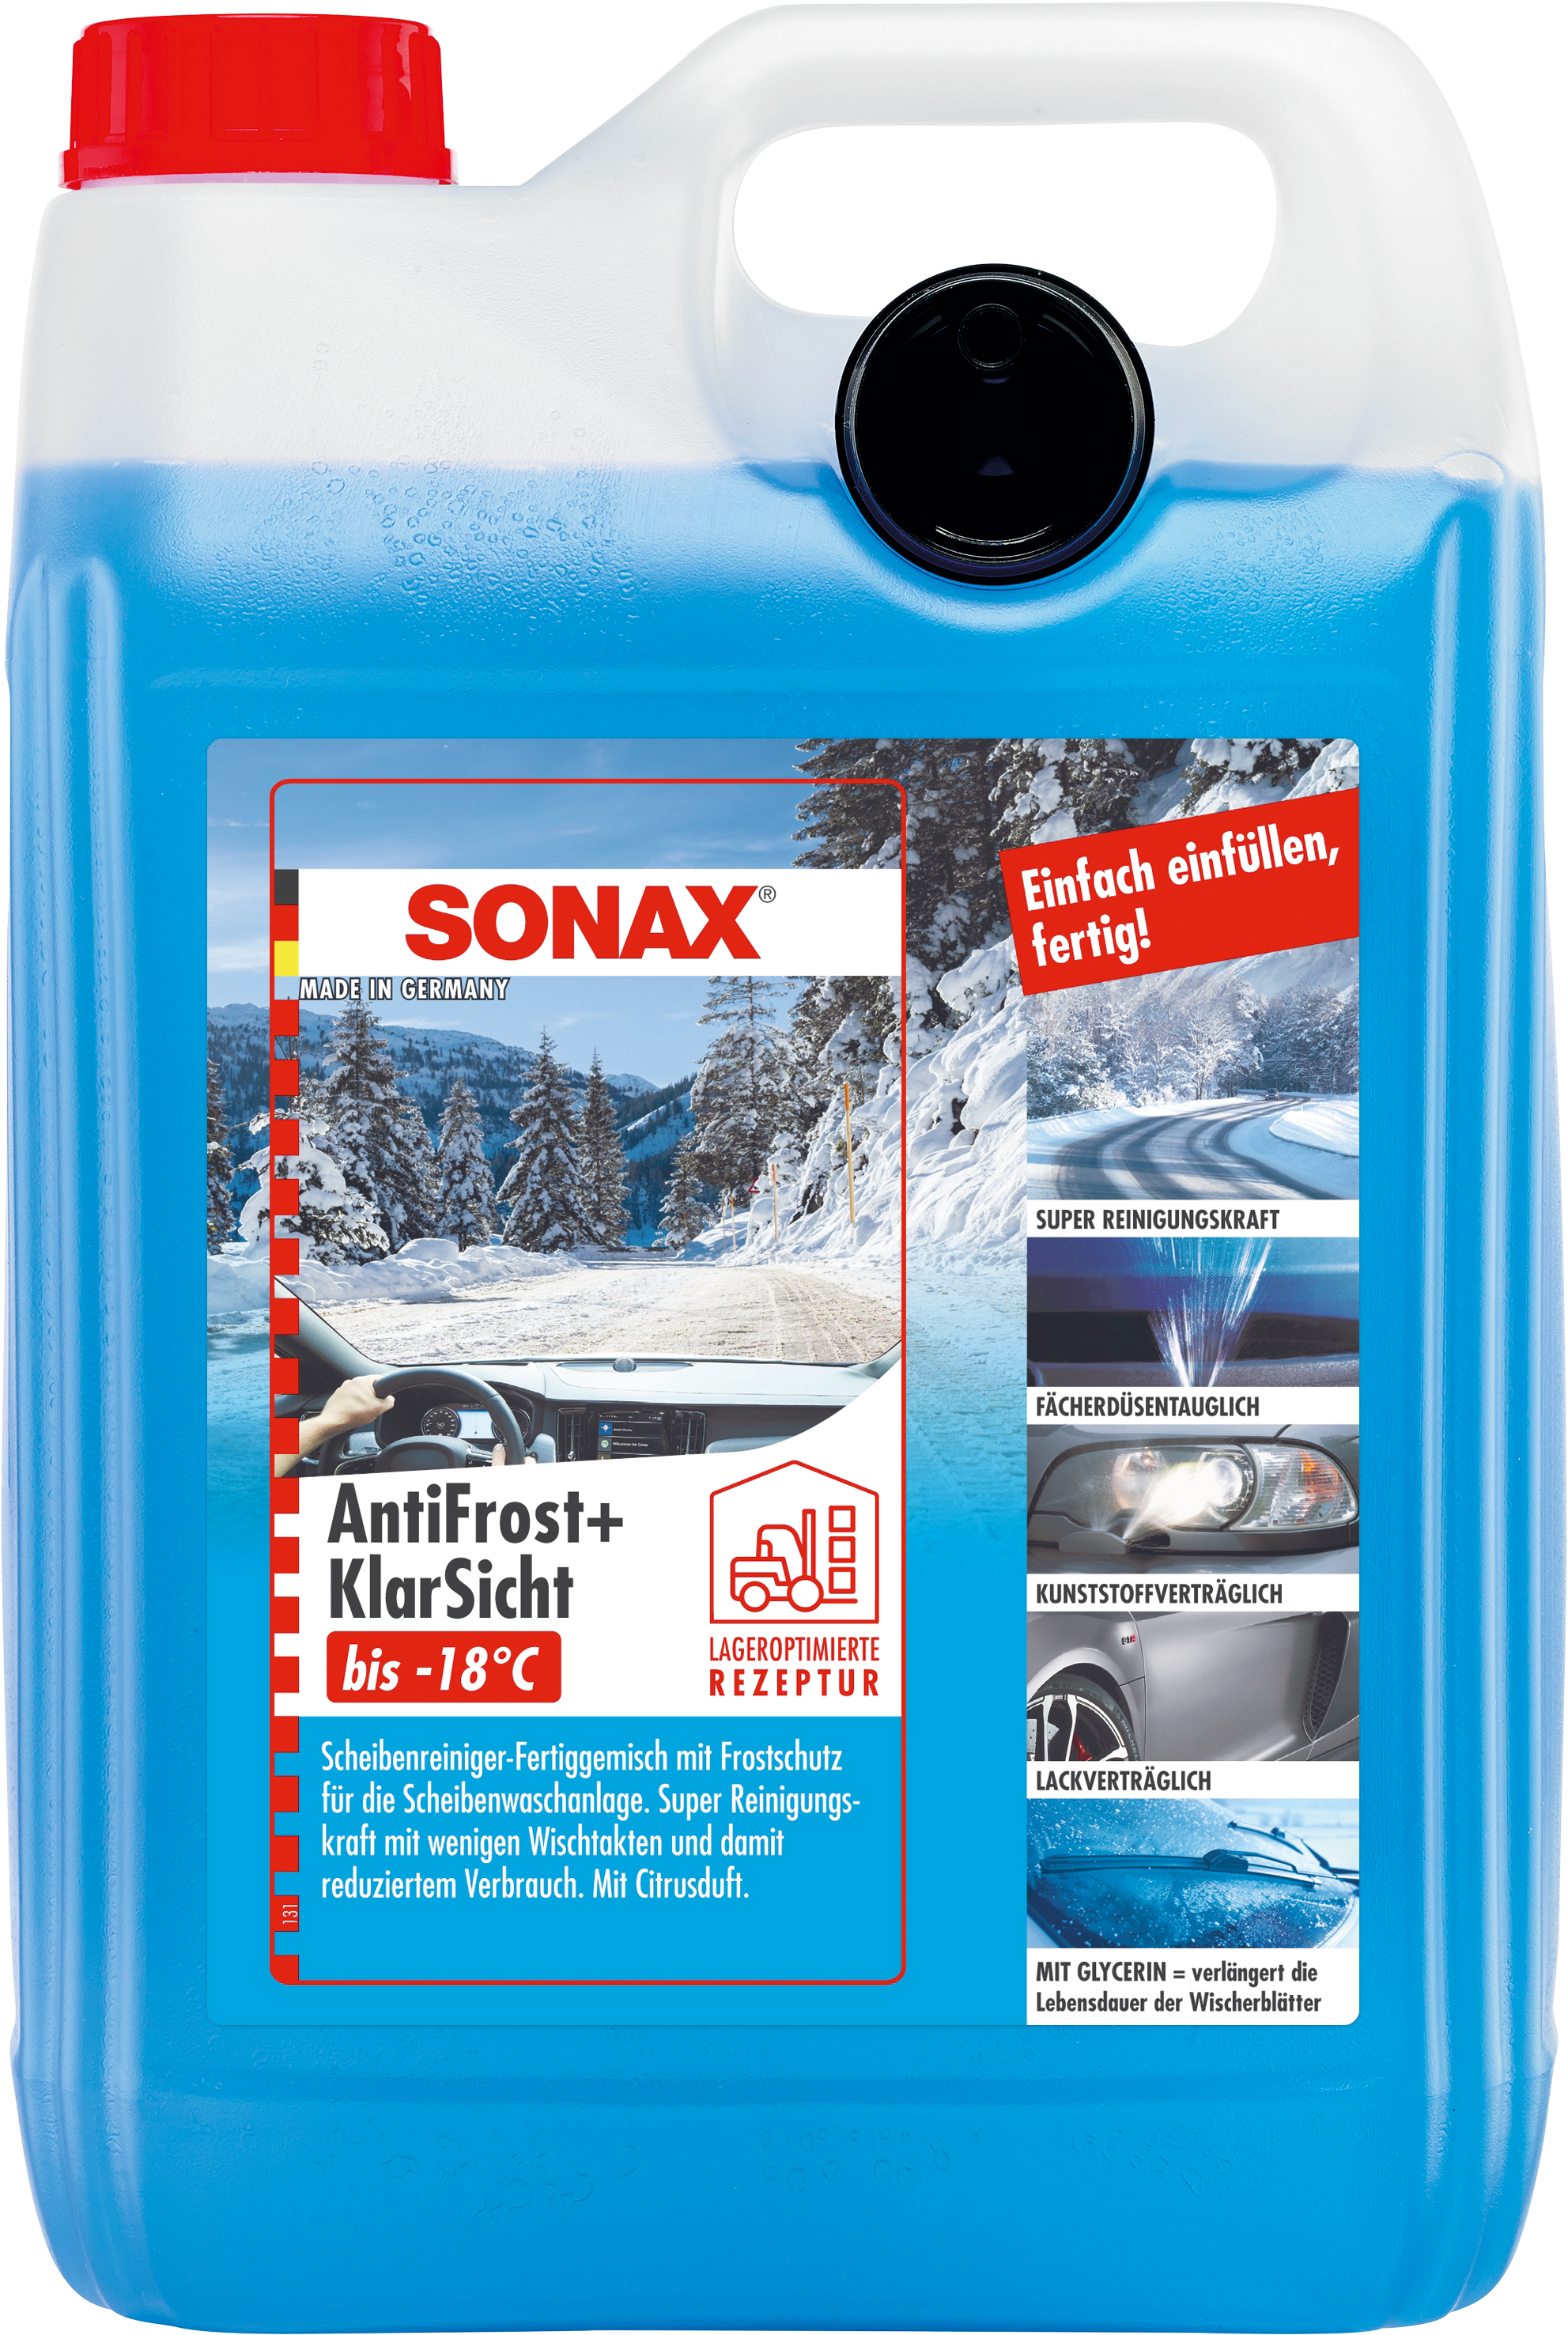 Winter - Sonax-AT